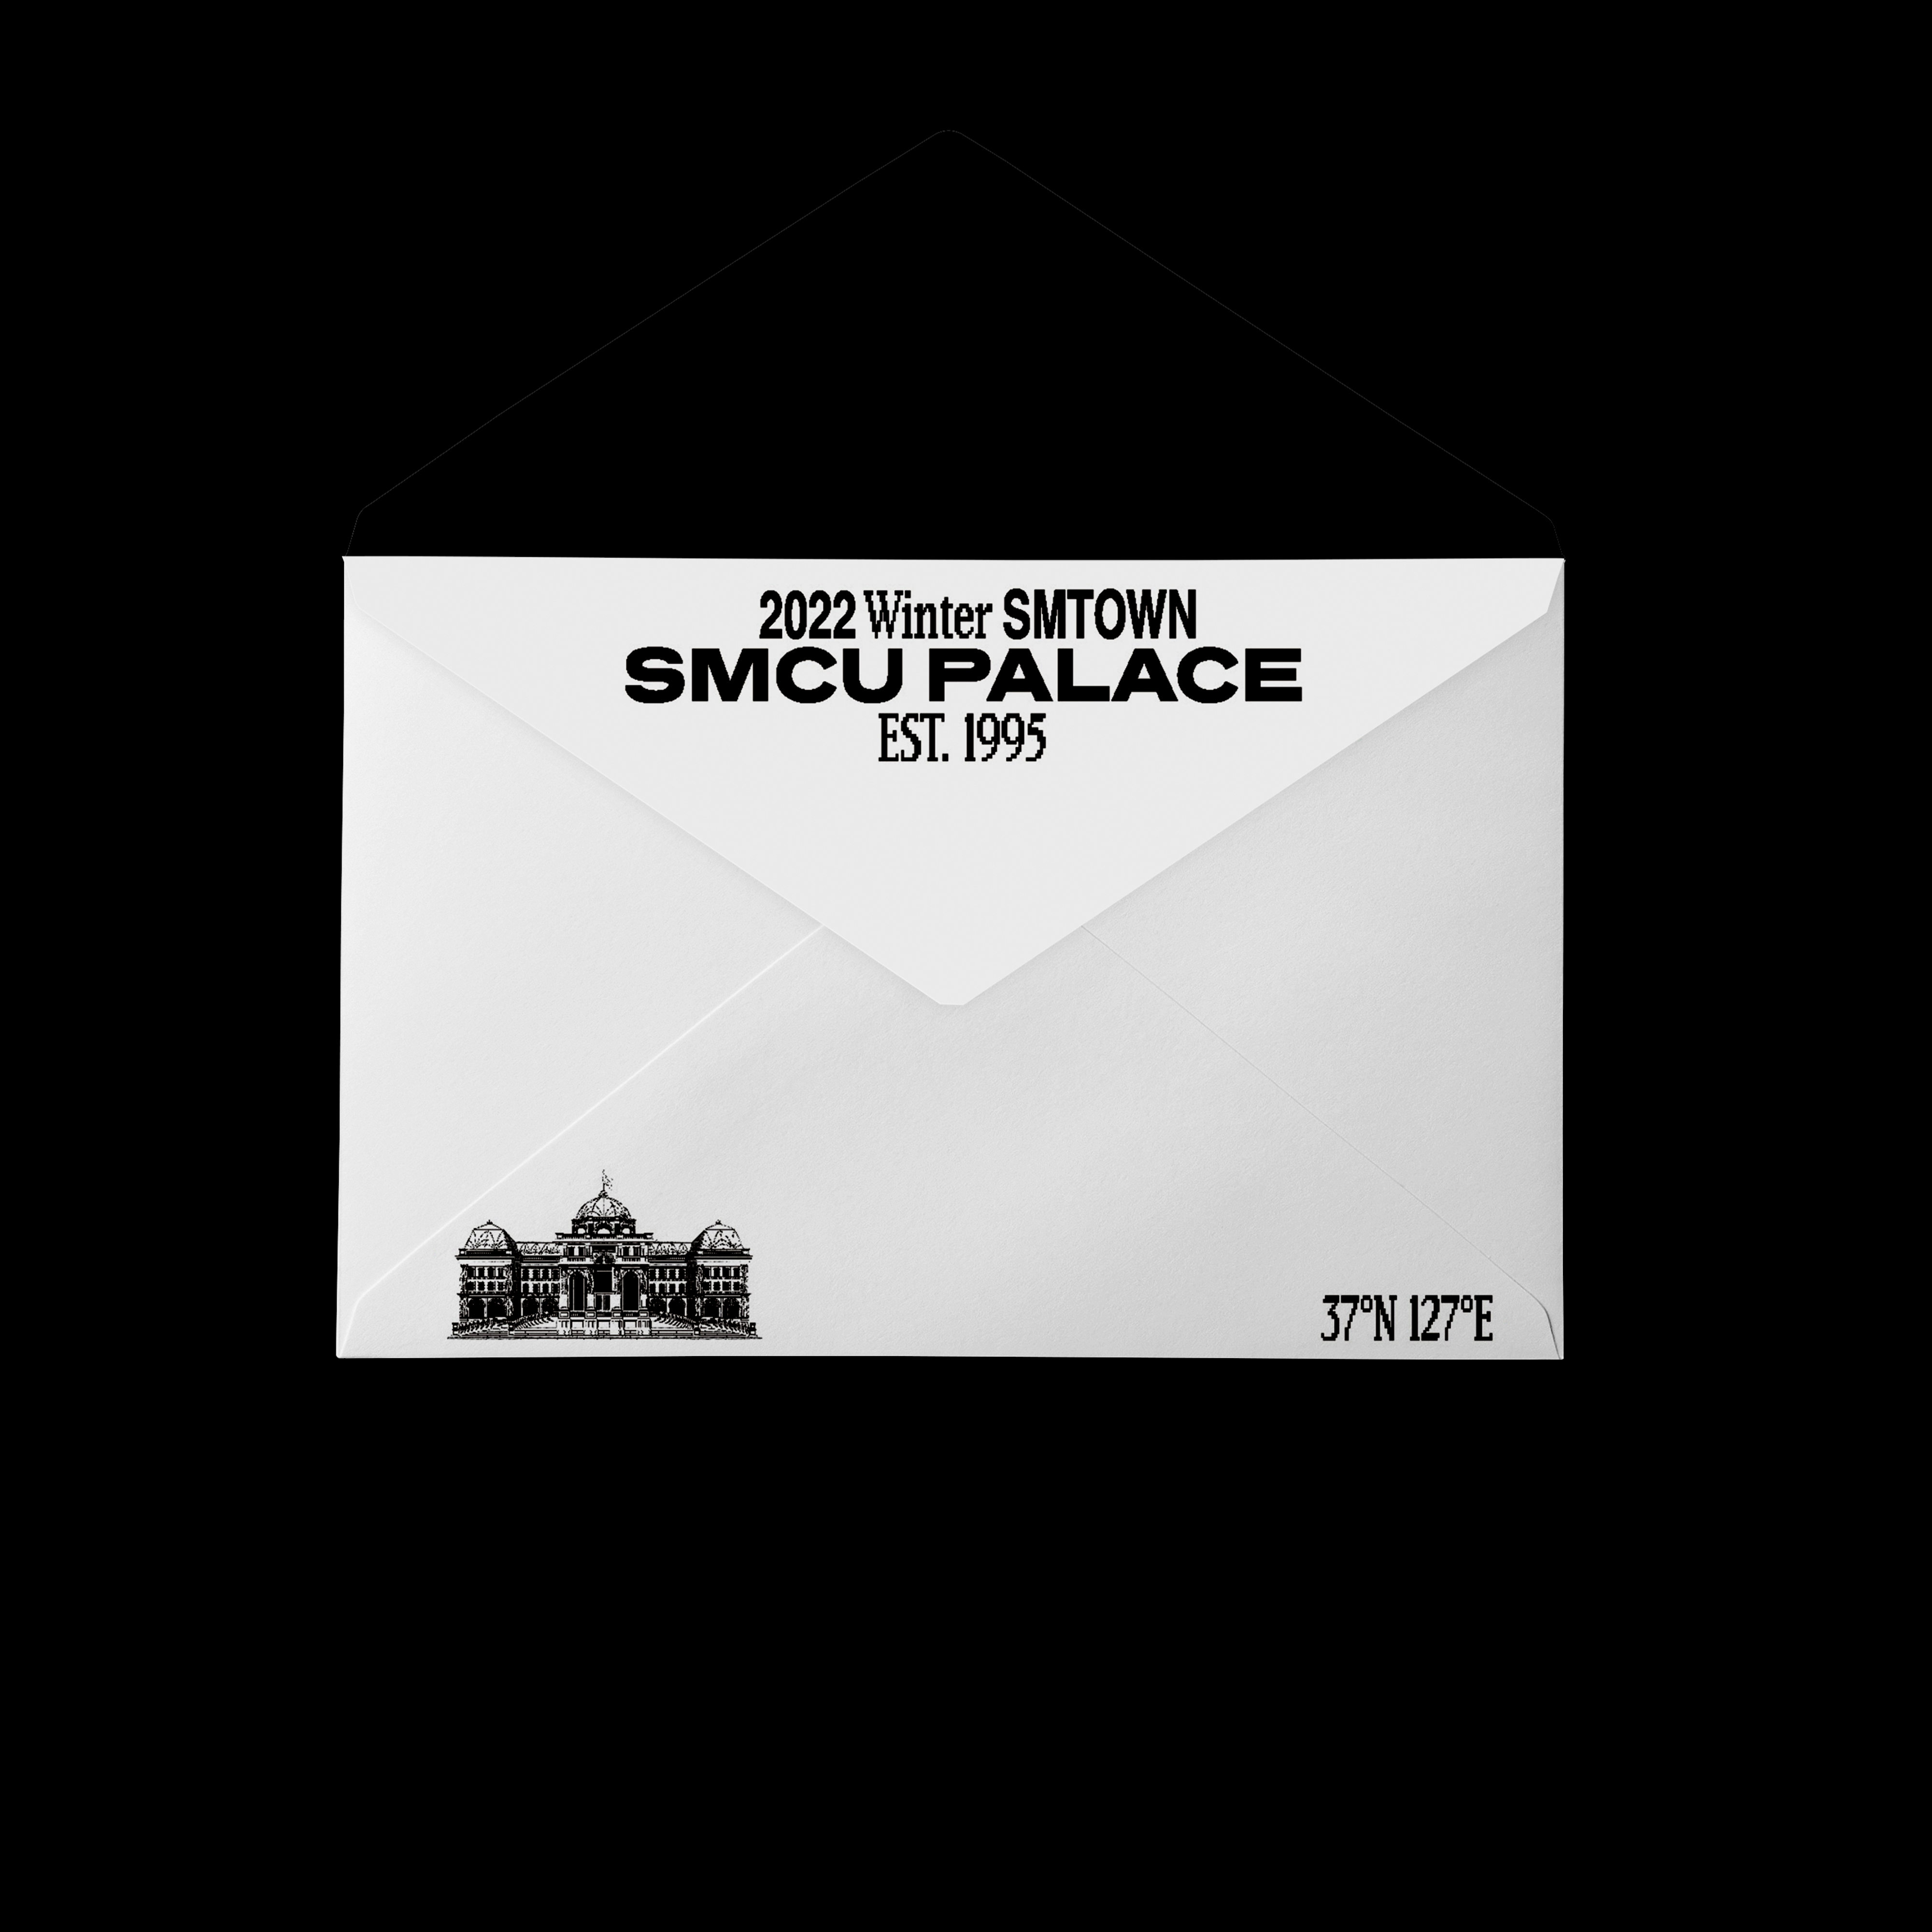 [全款 裸专] Super Junior - 2022 Winter SMTOWN : SMCU PALACE (GUEST. SUPER JUNIOR) (Membership Card Ver.) _Dalhaenim_小日月赫海